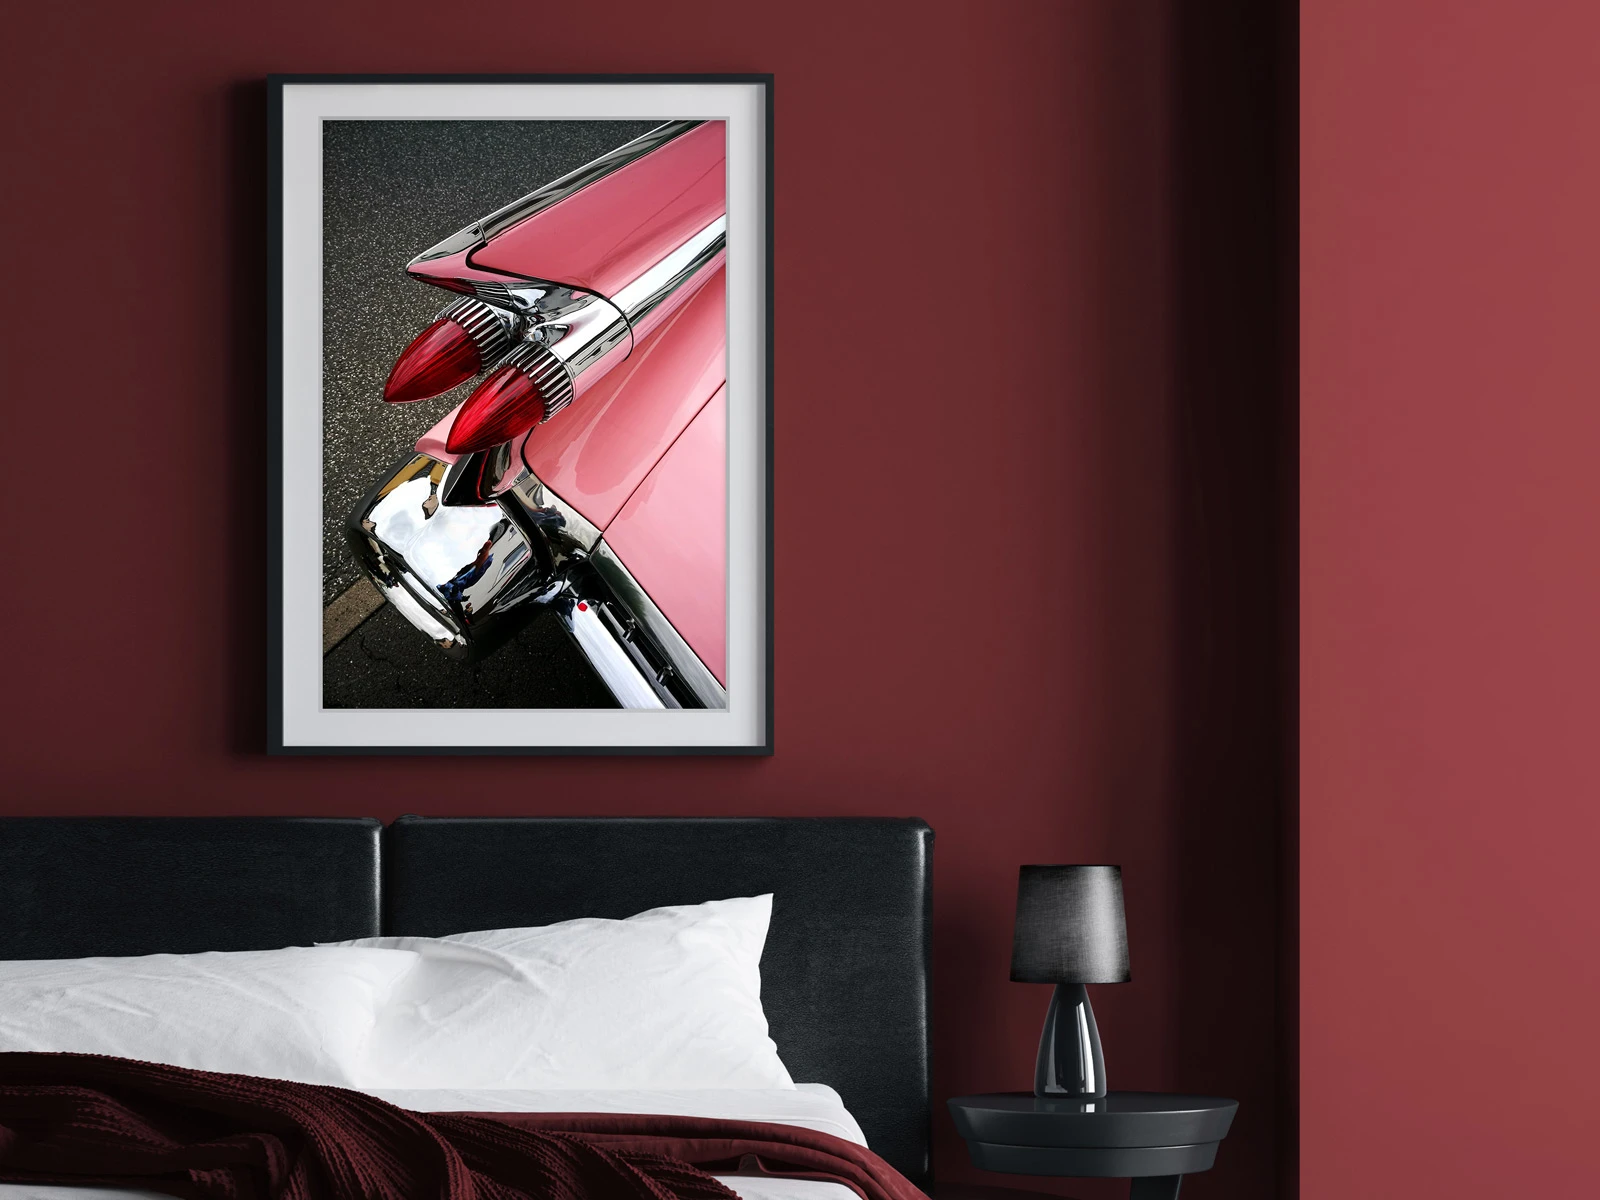 LightJet print on Fujiflex High Gloss paper in frame hanging on a wall.